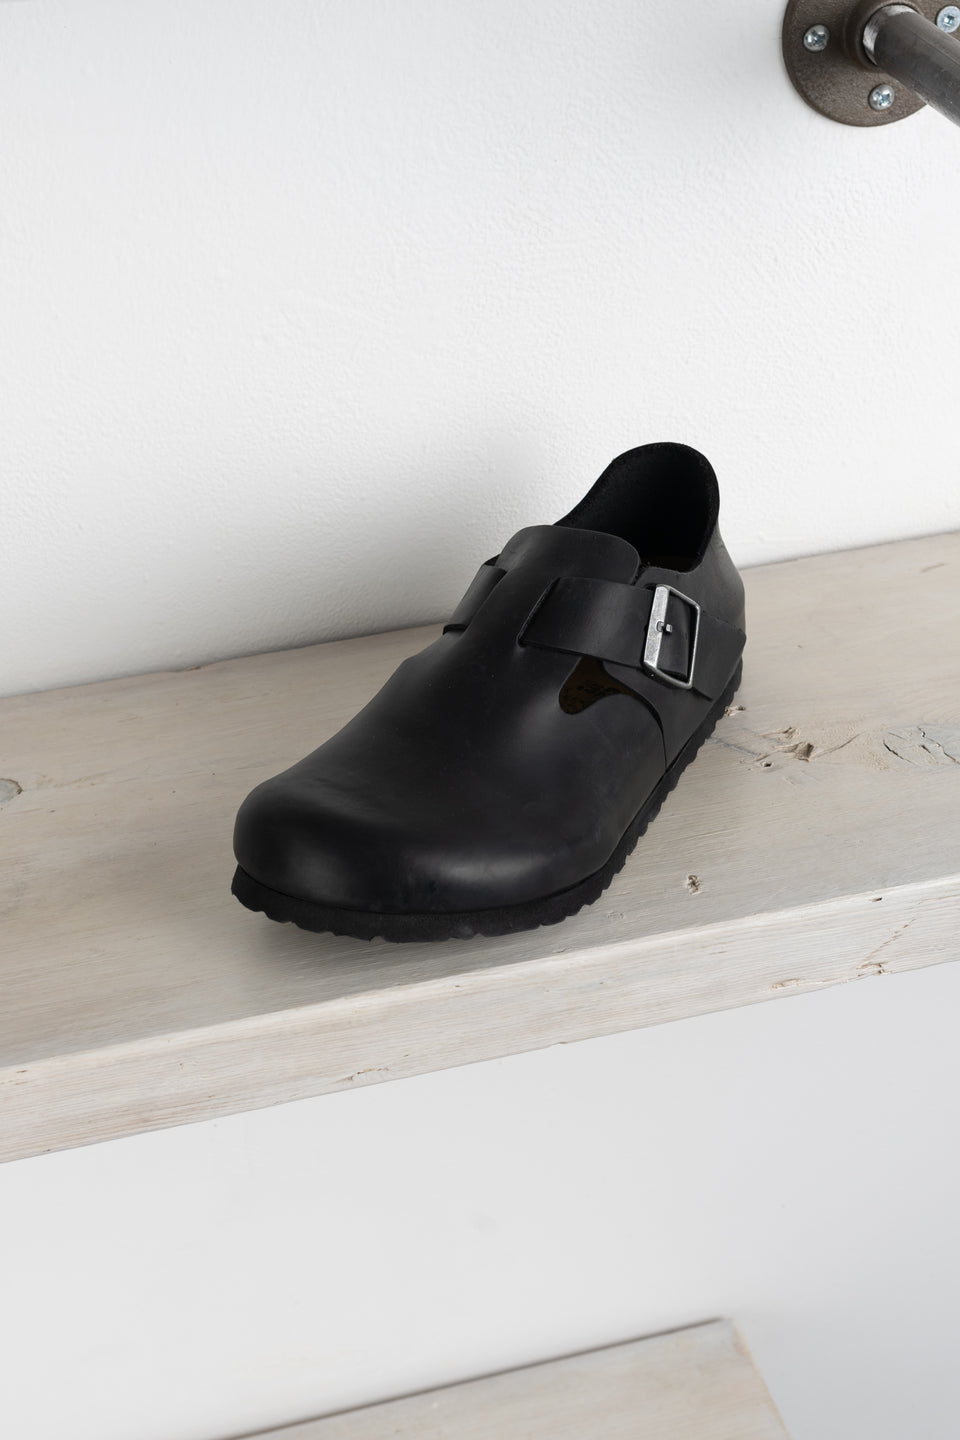 Birkenstock London Oiled Leather Black Boston Clog Shoes Calculus Victoria BC Canada